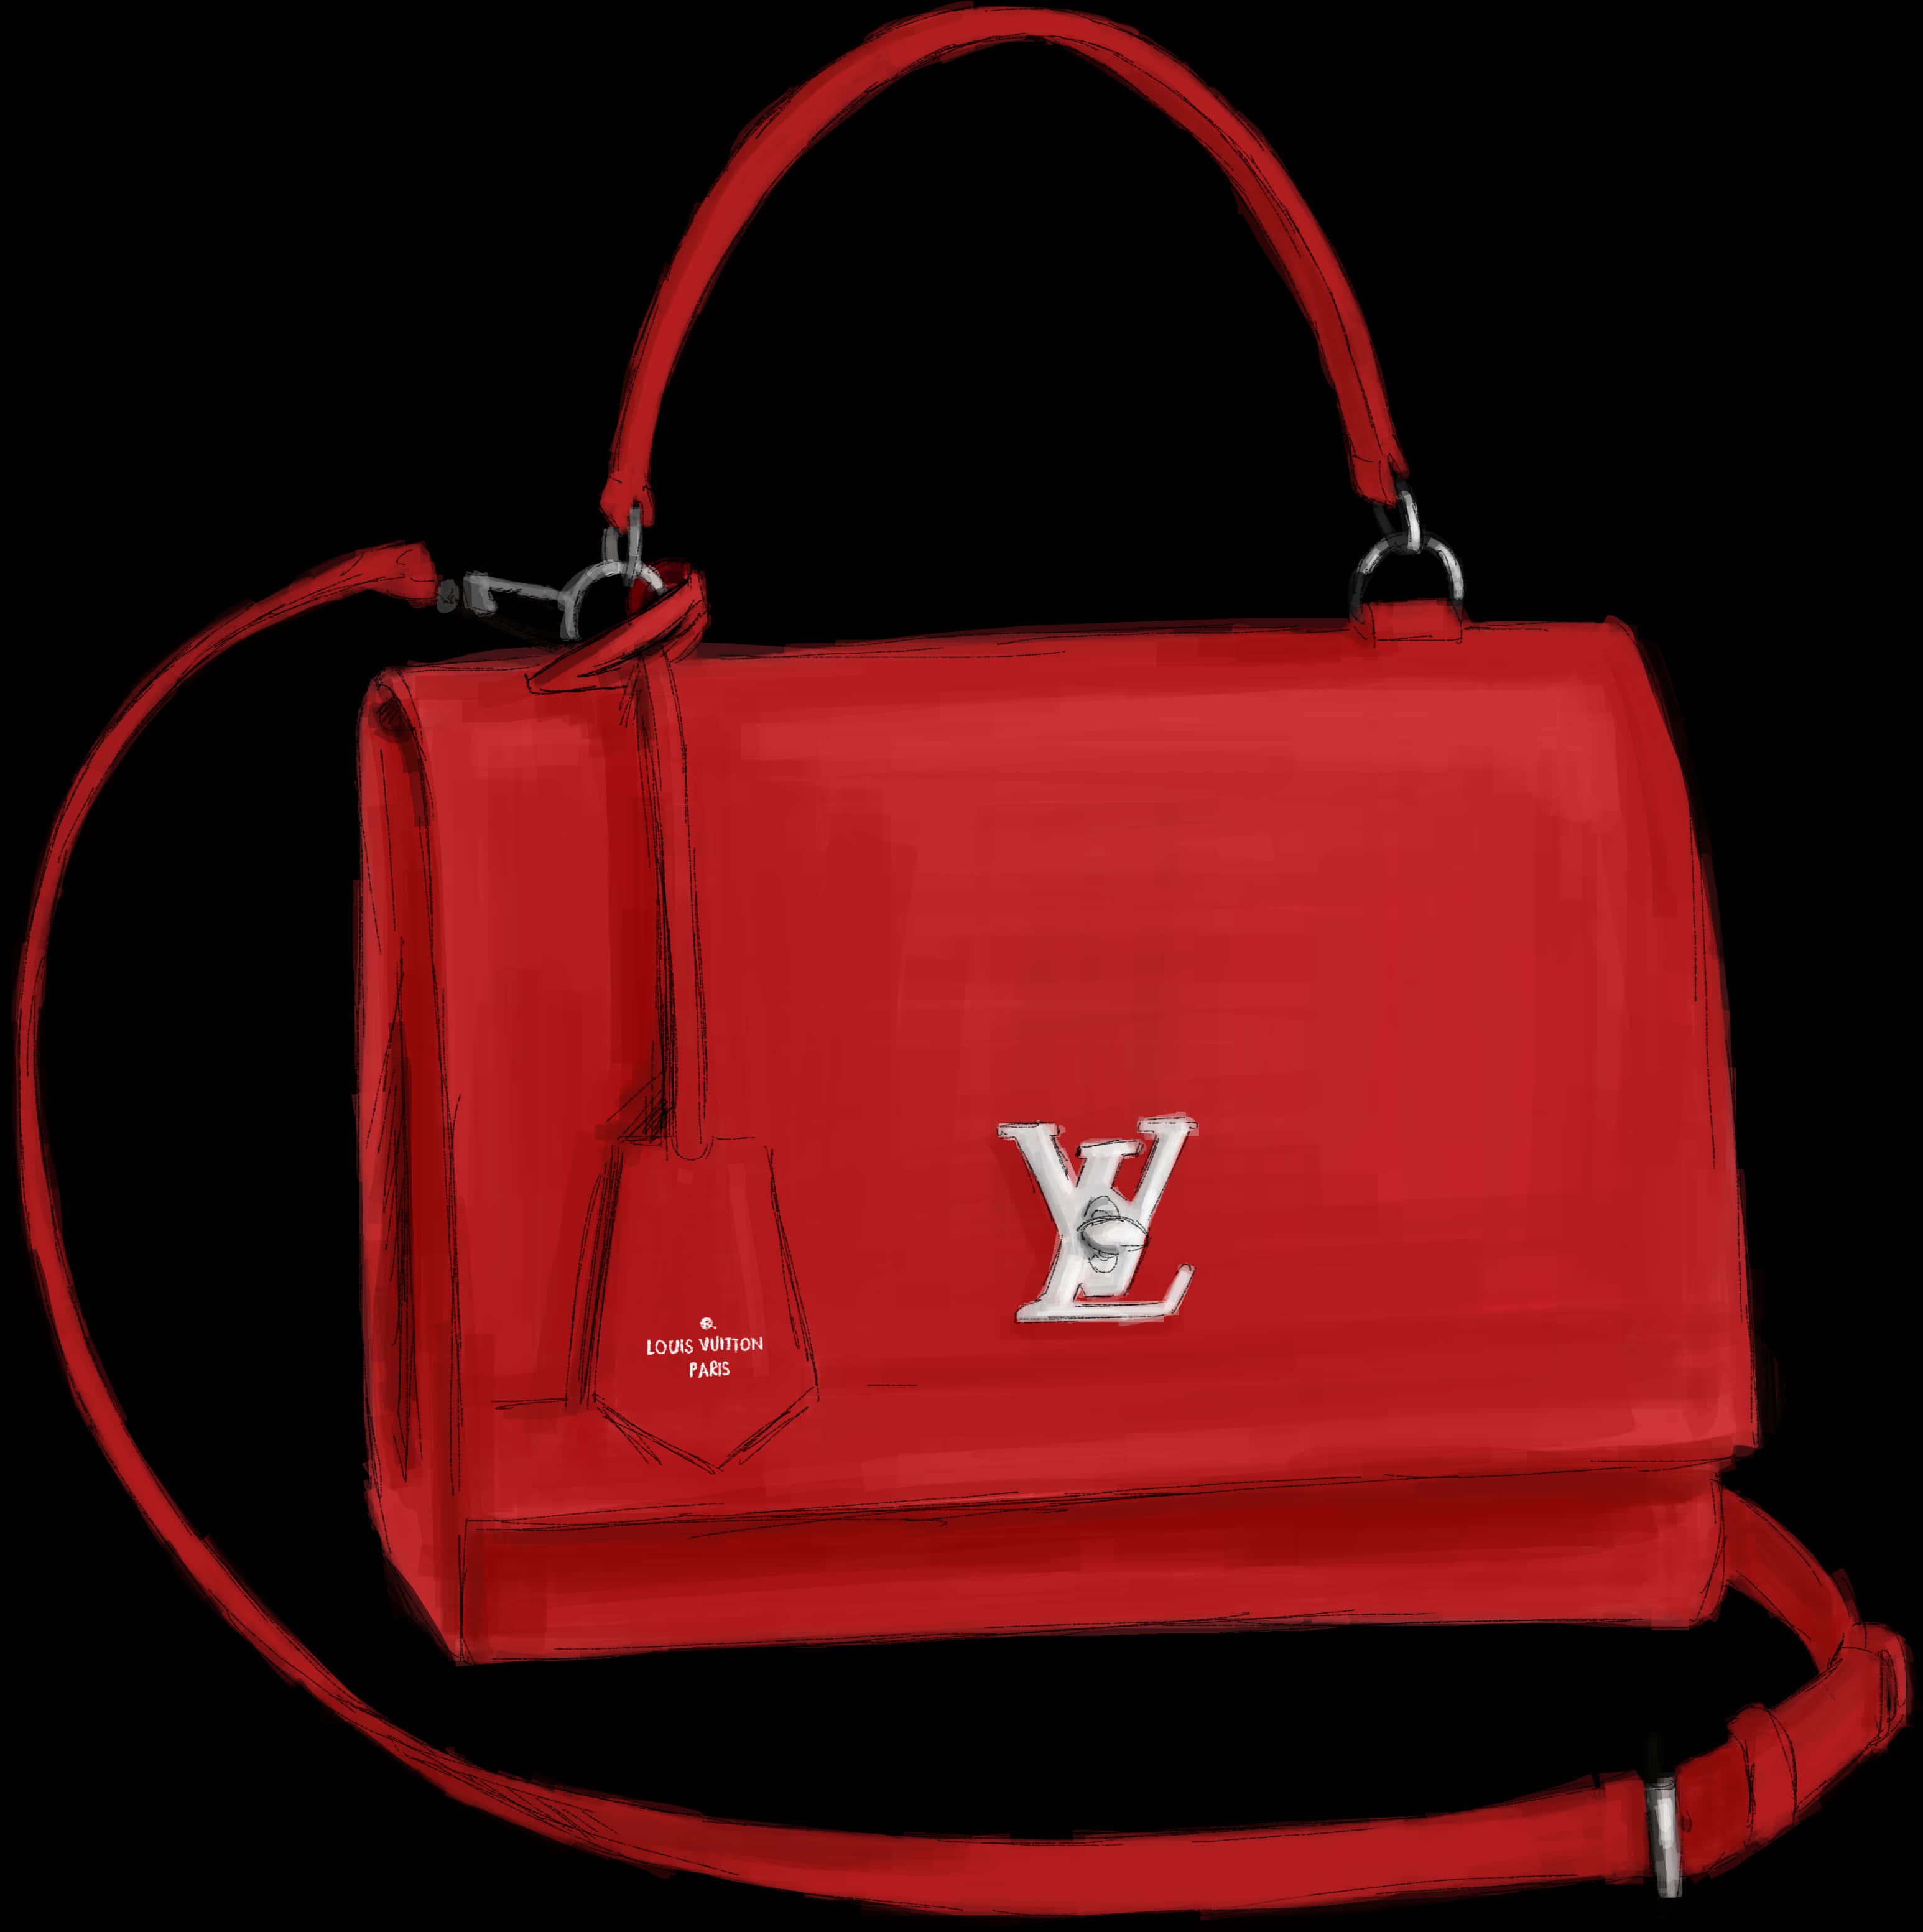 Red Louis Vuitton Handbag Illustration PNG